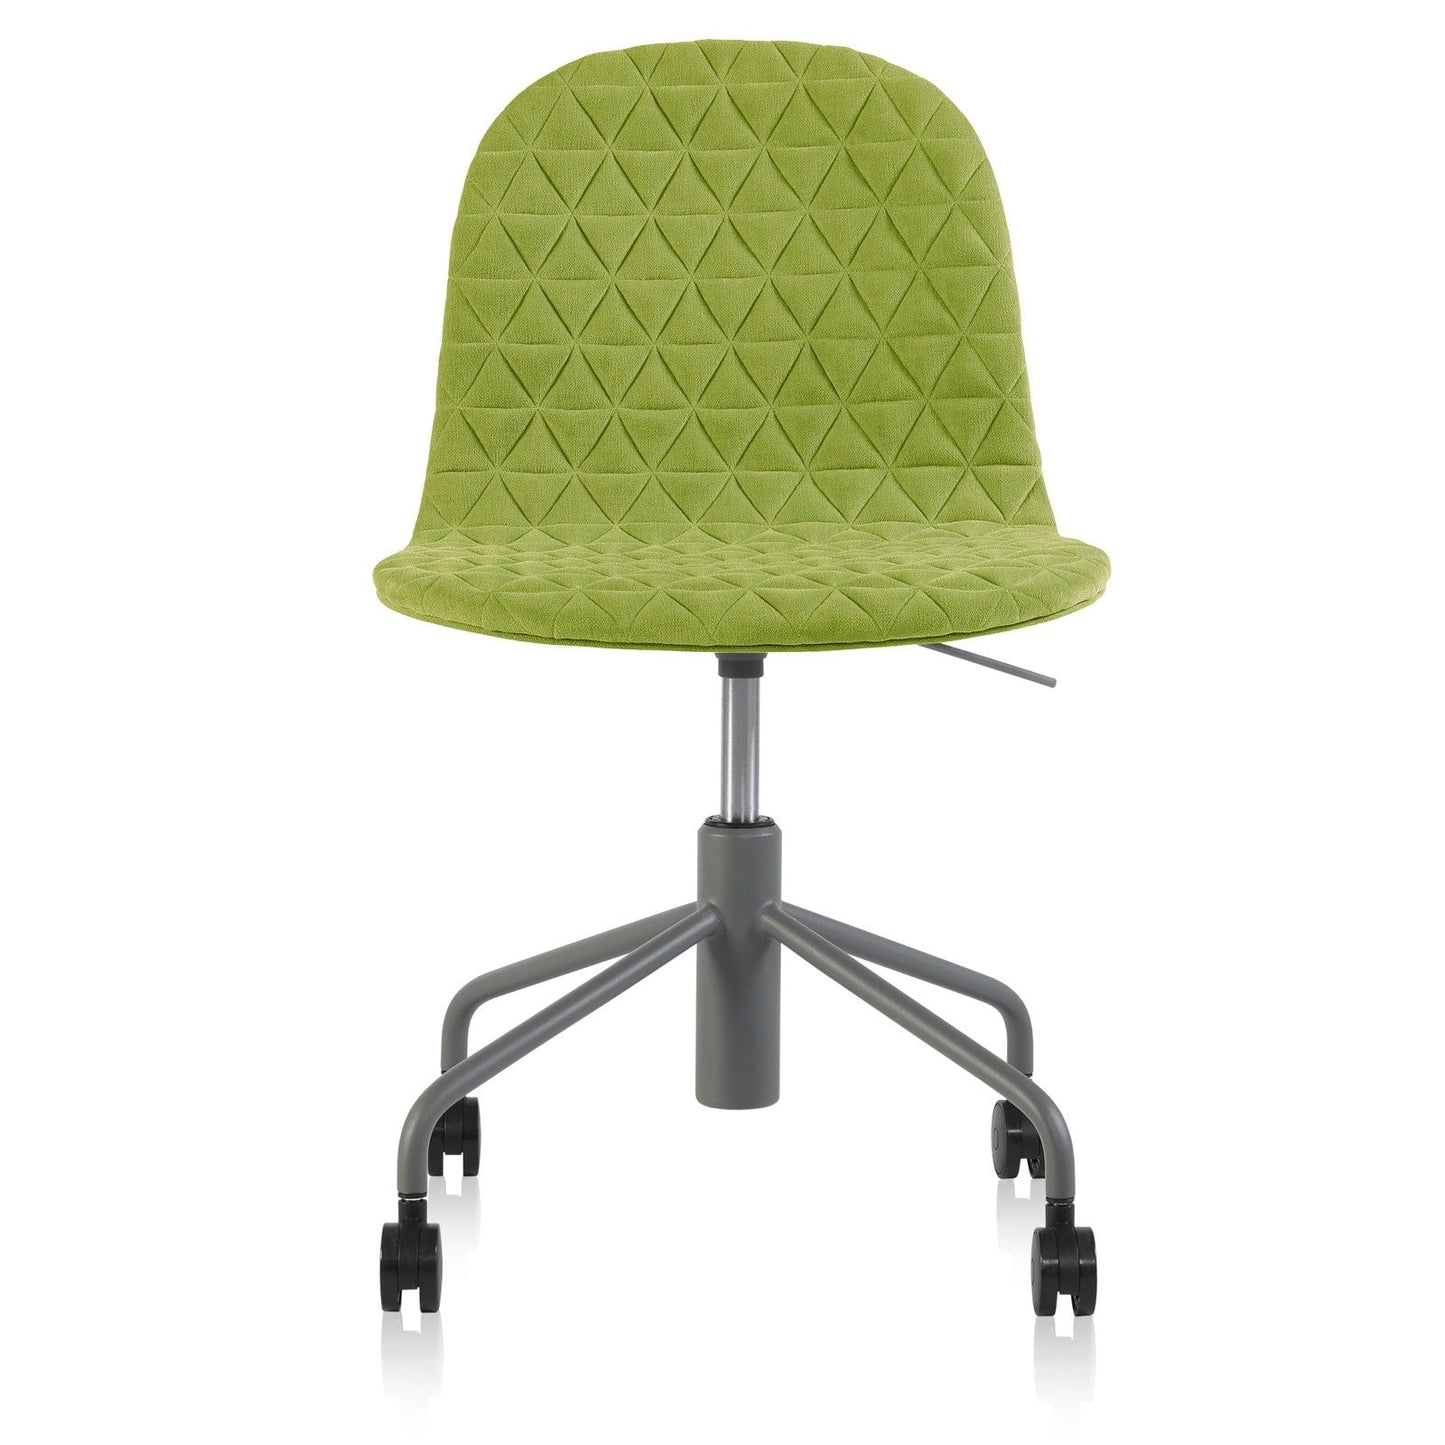 Krzesło Mannequin 06 - Zielone